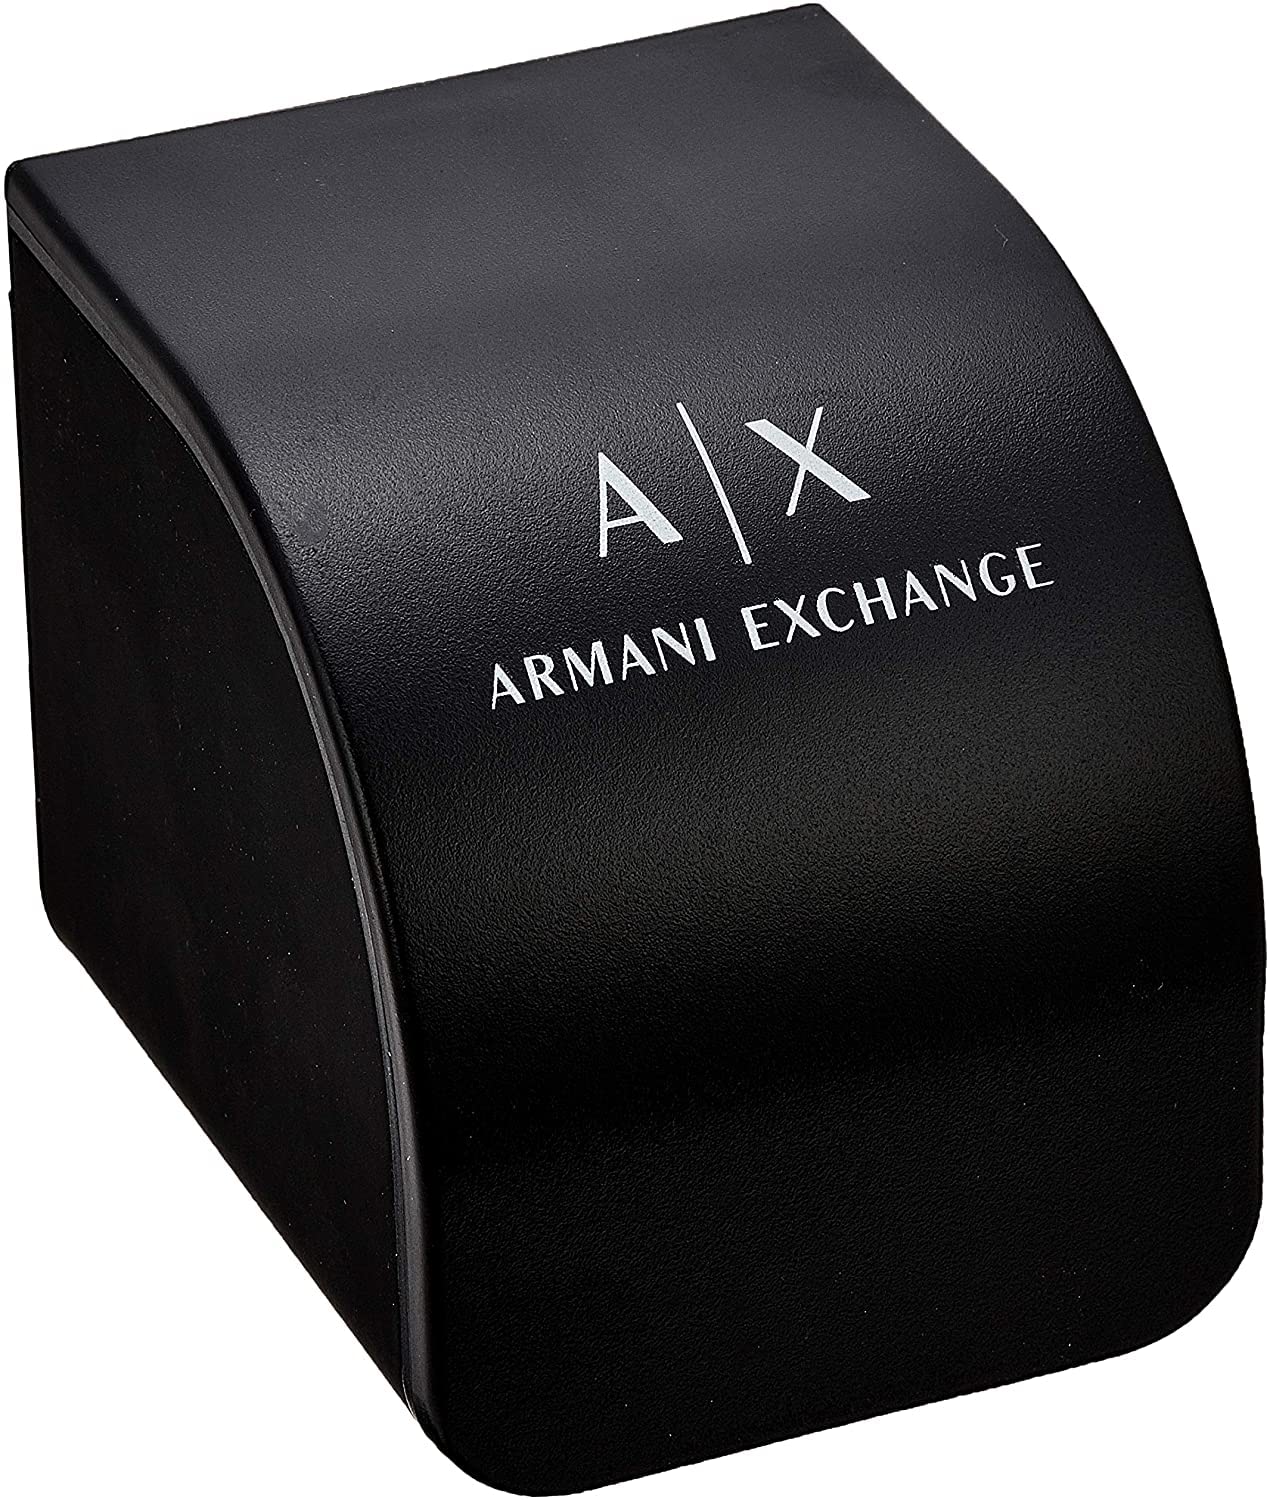 Armani Exchange Men's Stainless Steel Three Hand Dress Watch